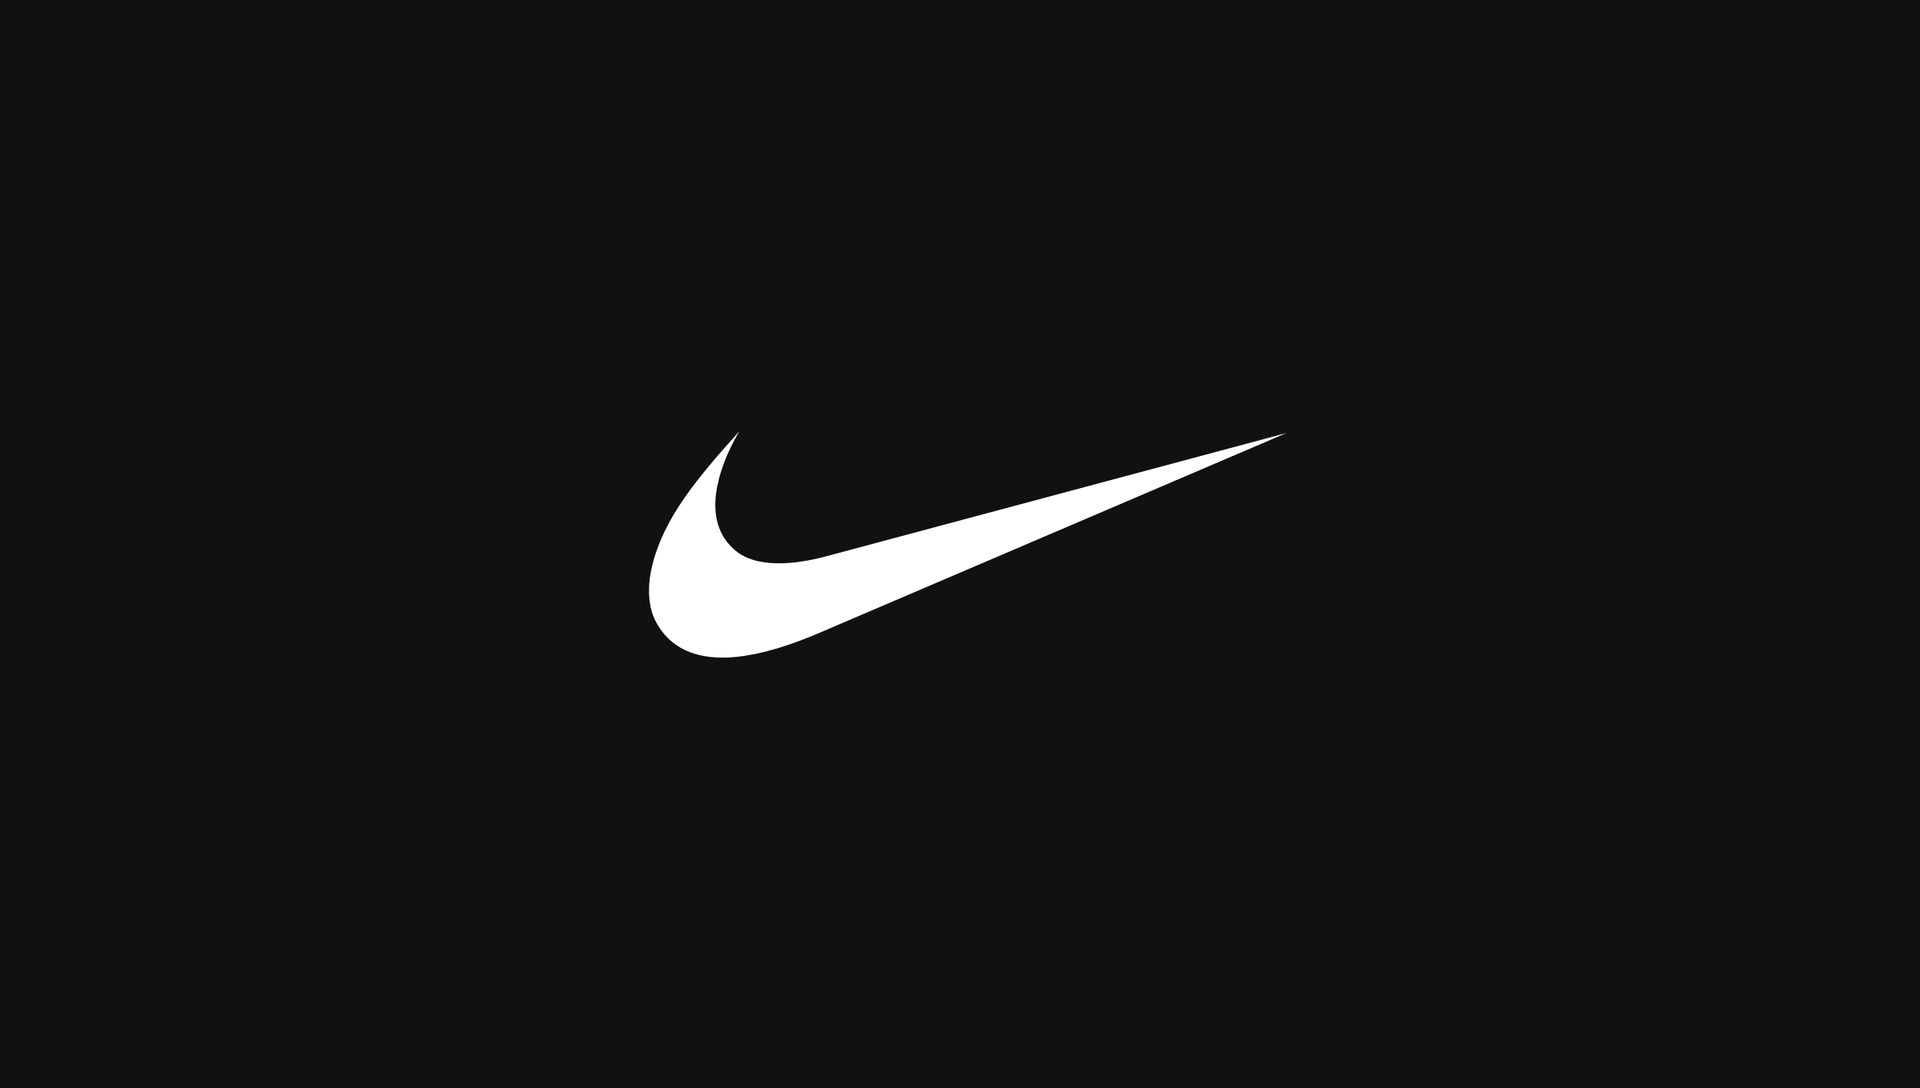 Nike Ups its NFT Game to Launch .SWOOSH Web3 Platform